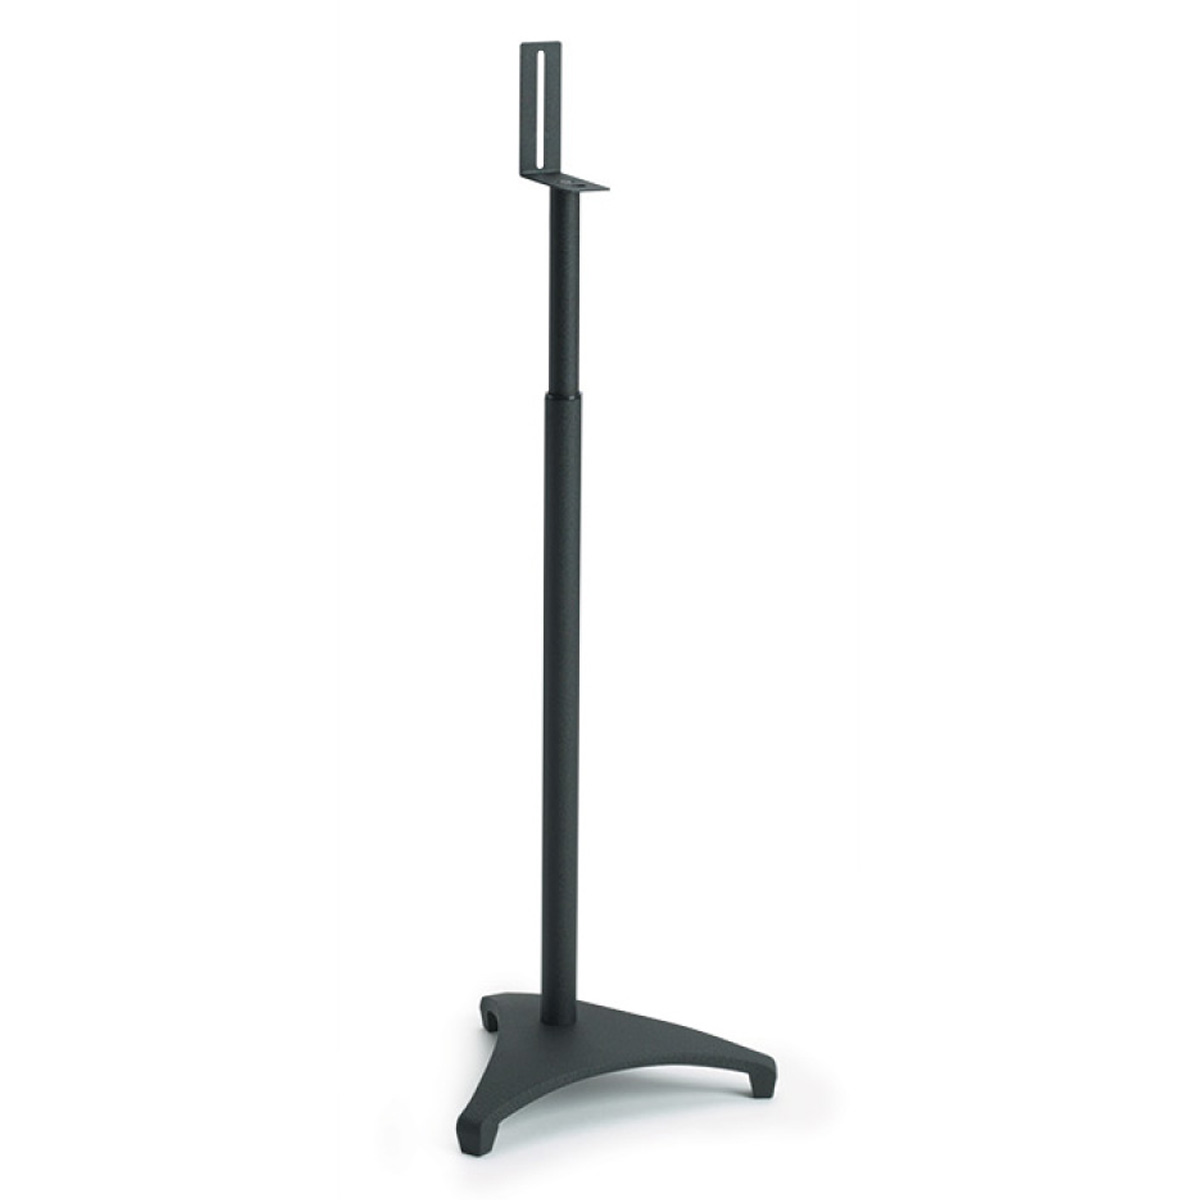 Sanus Euro Series Adjustable Speaker Stand for Satellite Speakers, Height Adjustable 26-42", Sold as Pair, Black - image 3 of 8